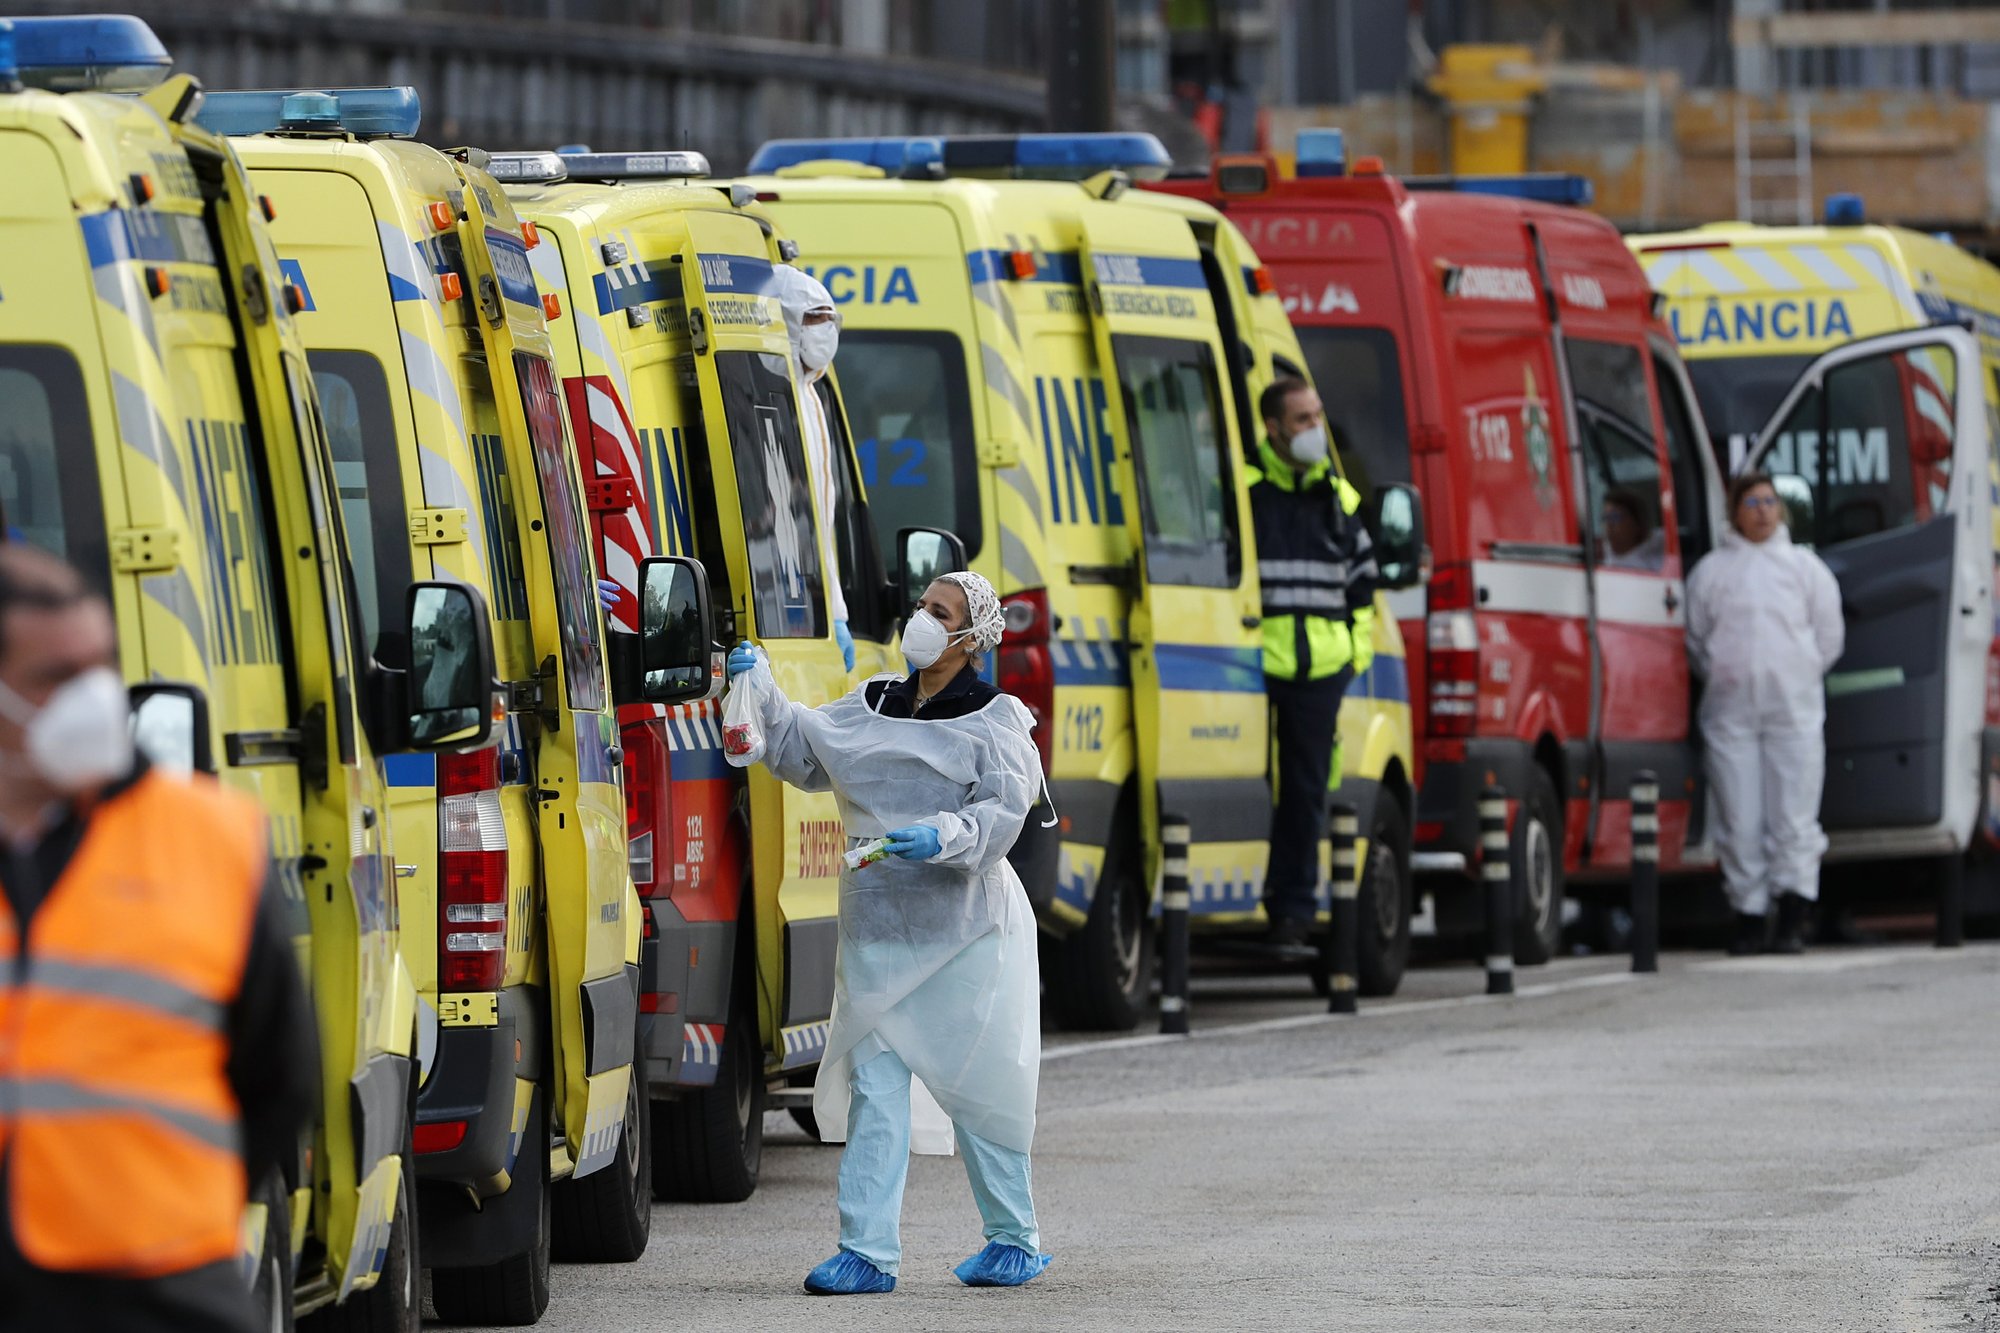 Ambulances queue outside hospital in Portugal - enlarge